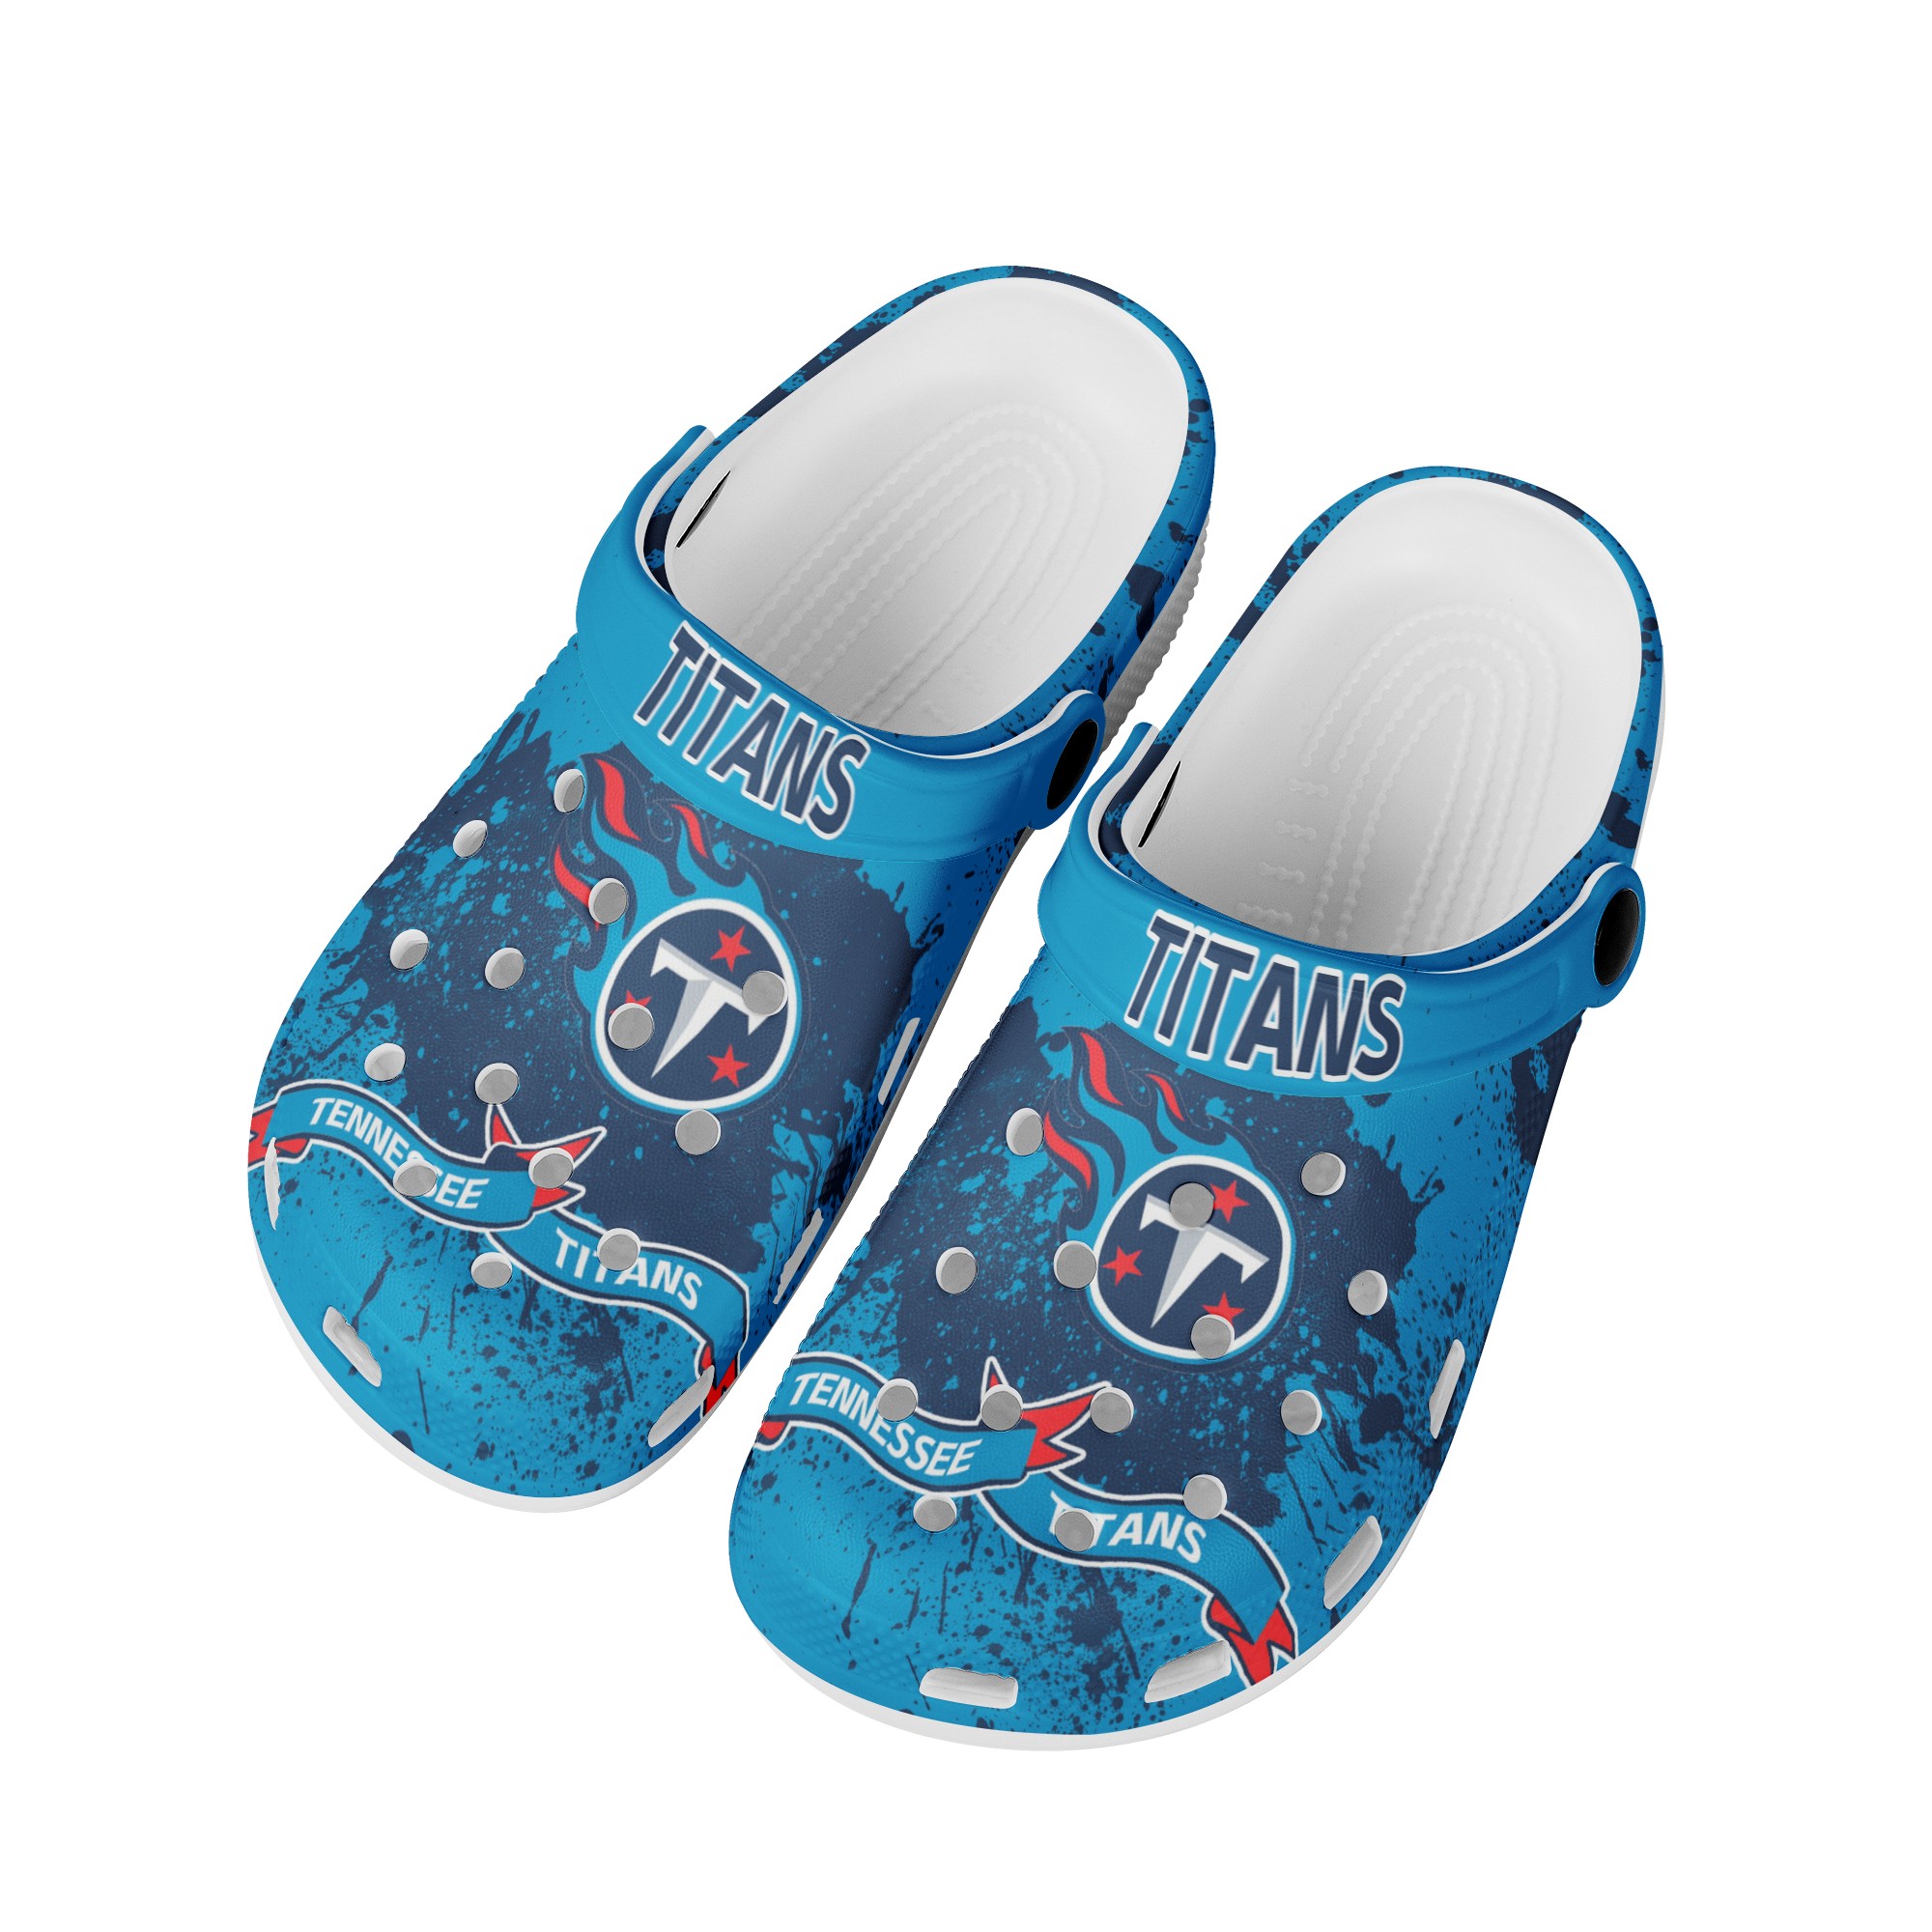 Tennessee Titans Crocs Shoes